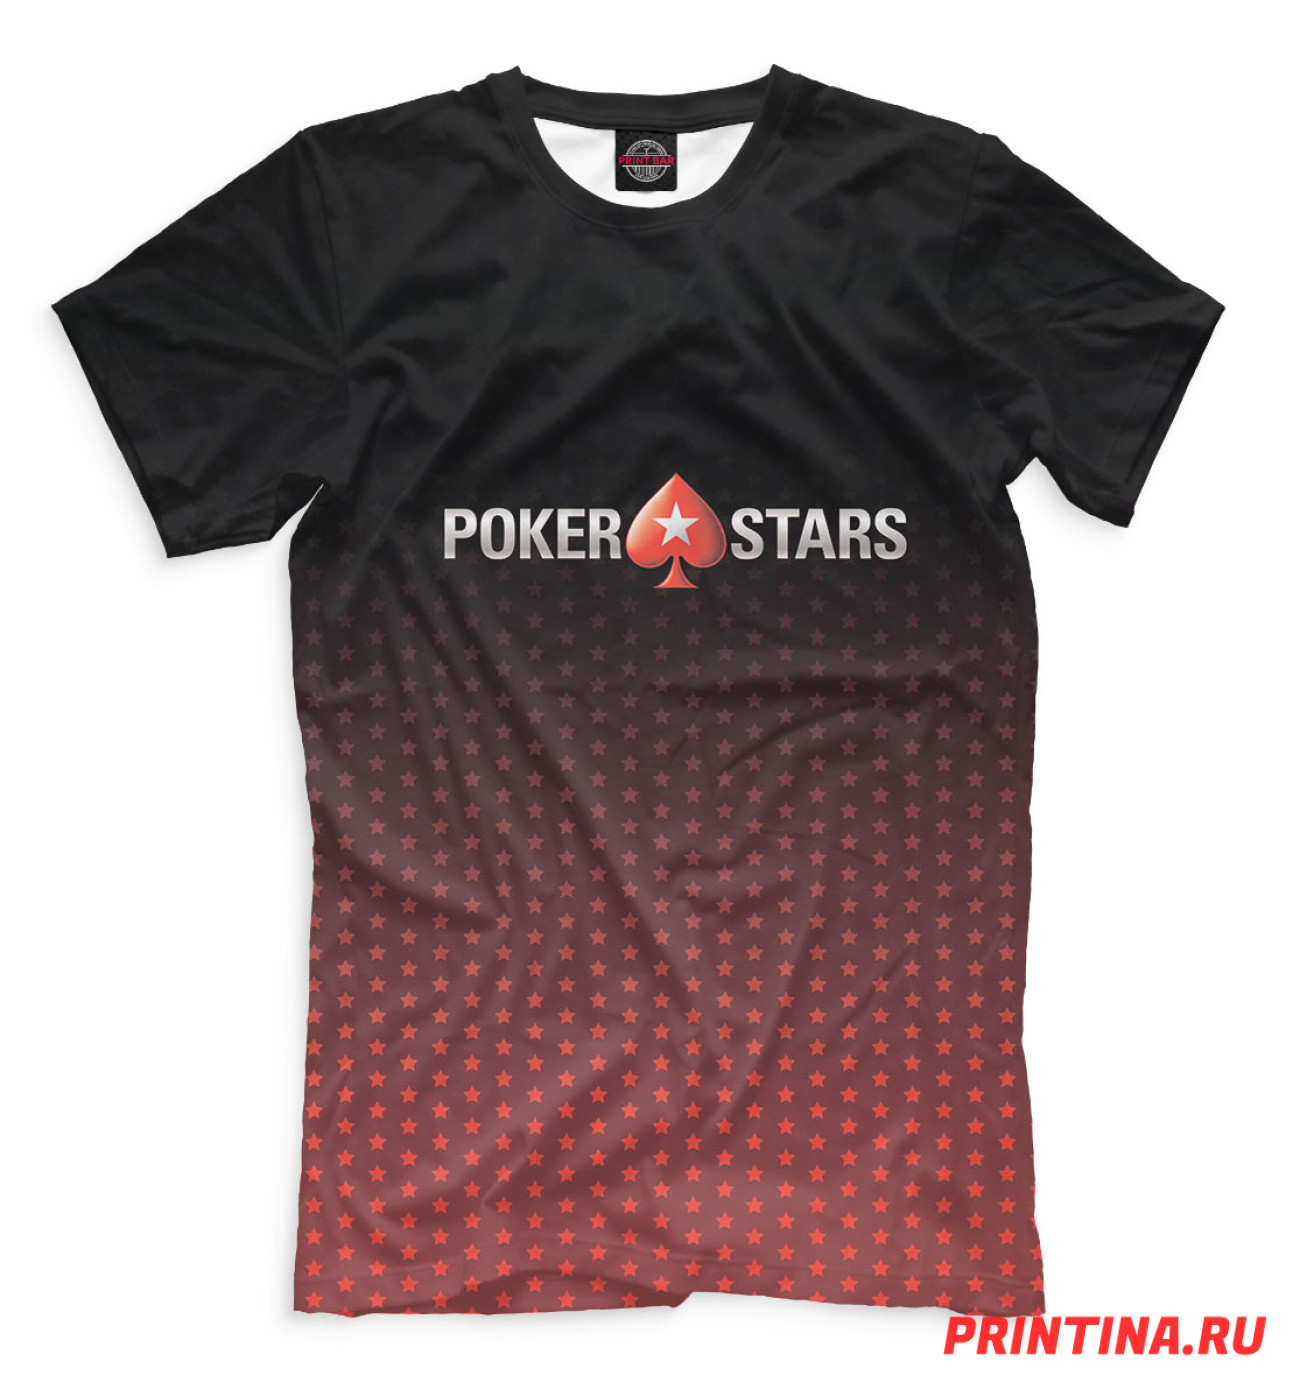 Мужская Футболка Pokerstars, артикул: POK-714282-fut-2